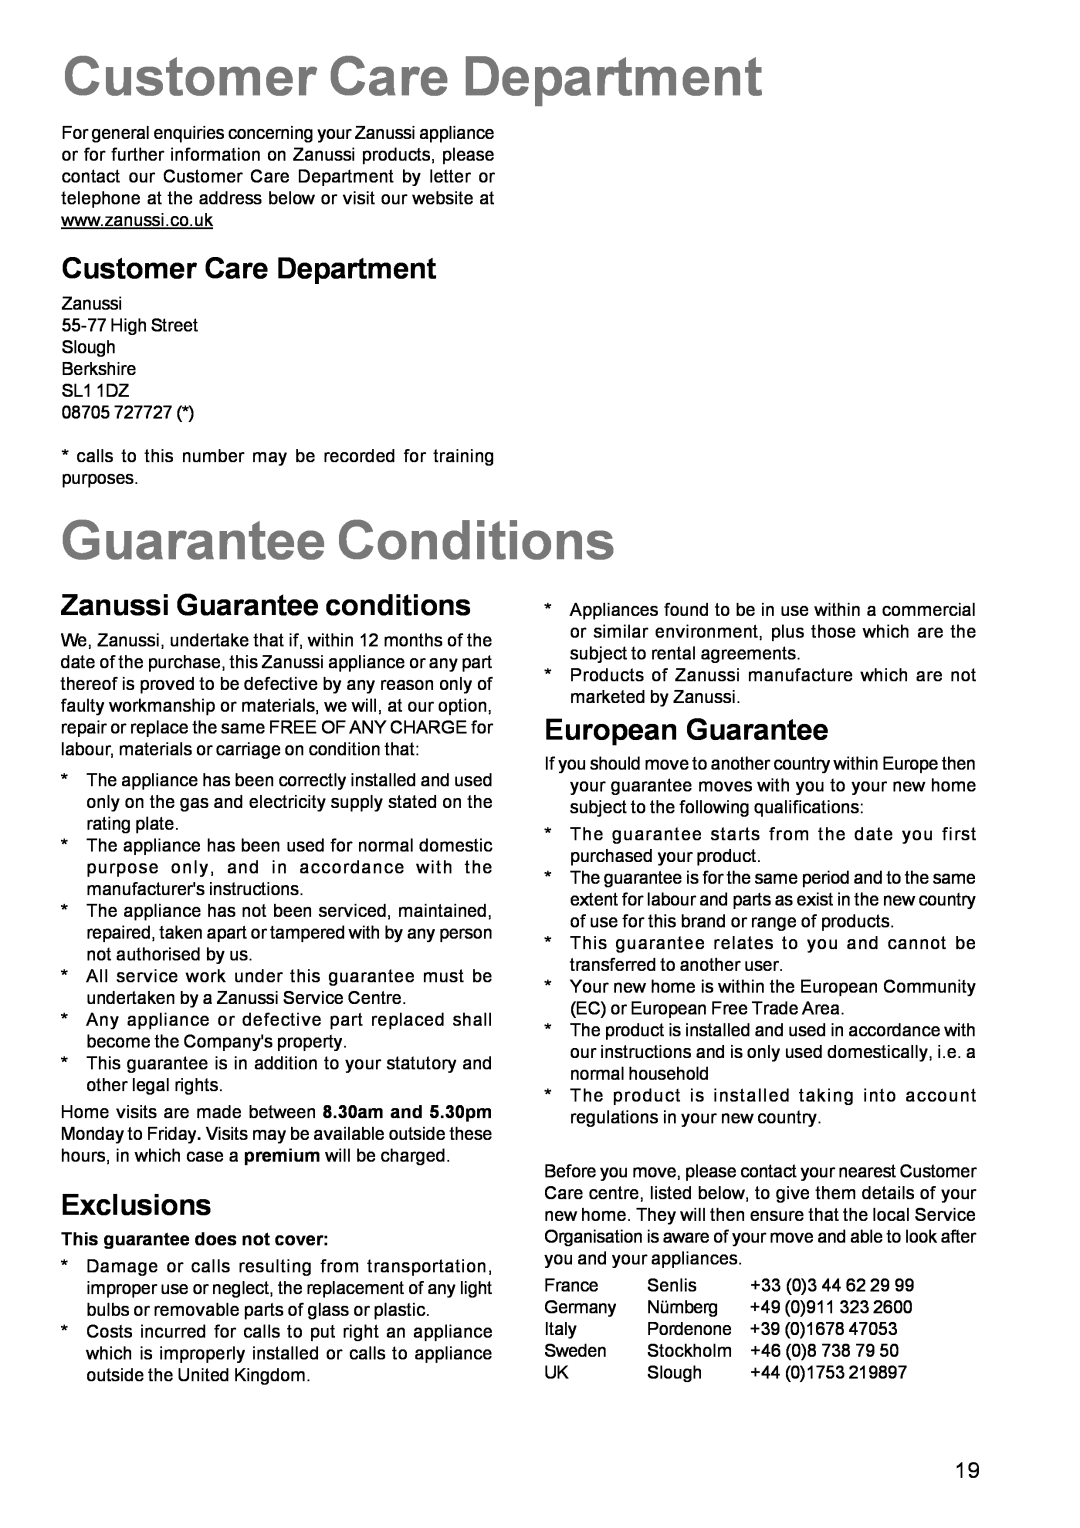 Zanussi ZCE 630 manual Customer Care Department, Guarantee Conditions, Zanussi Guarantee conditions, Exclusions 